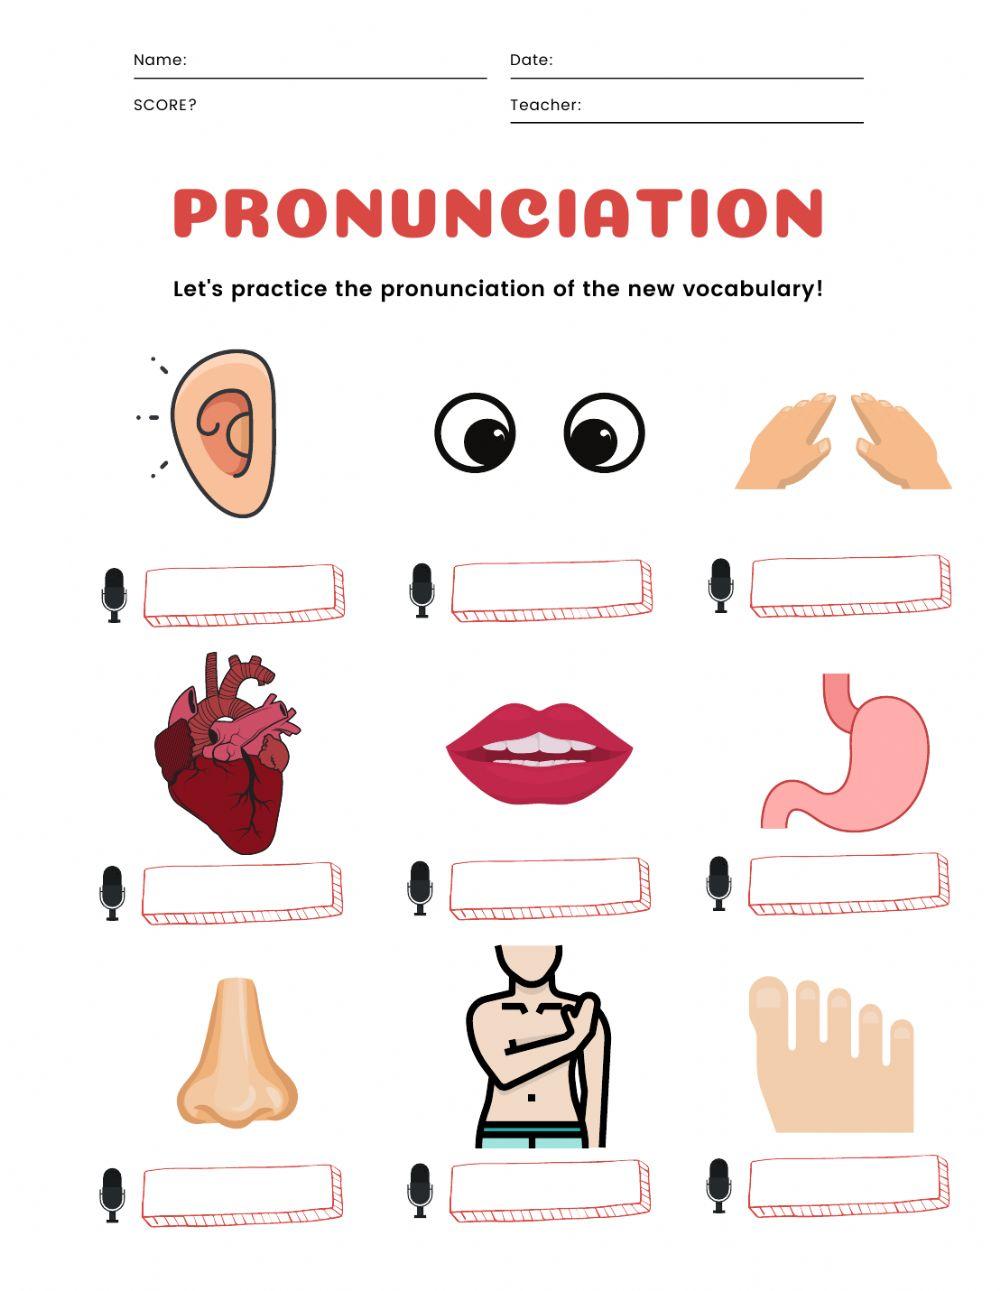 Pronouncing Body parts